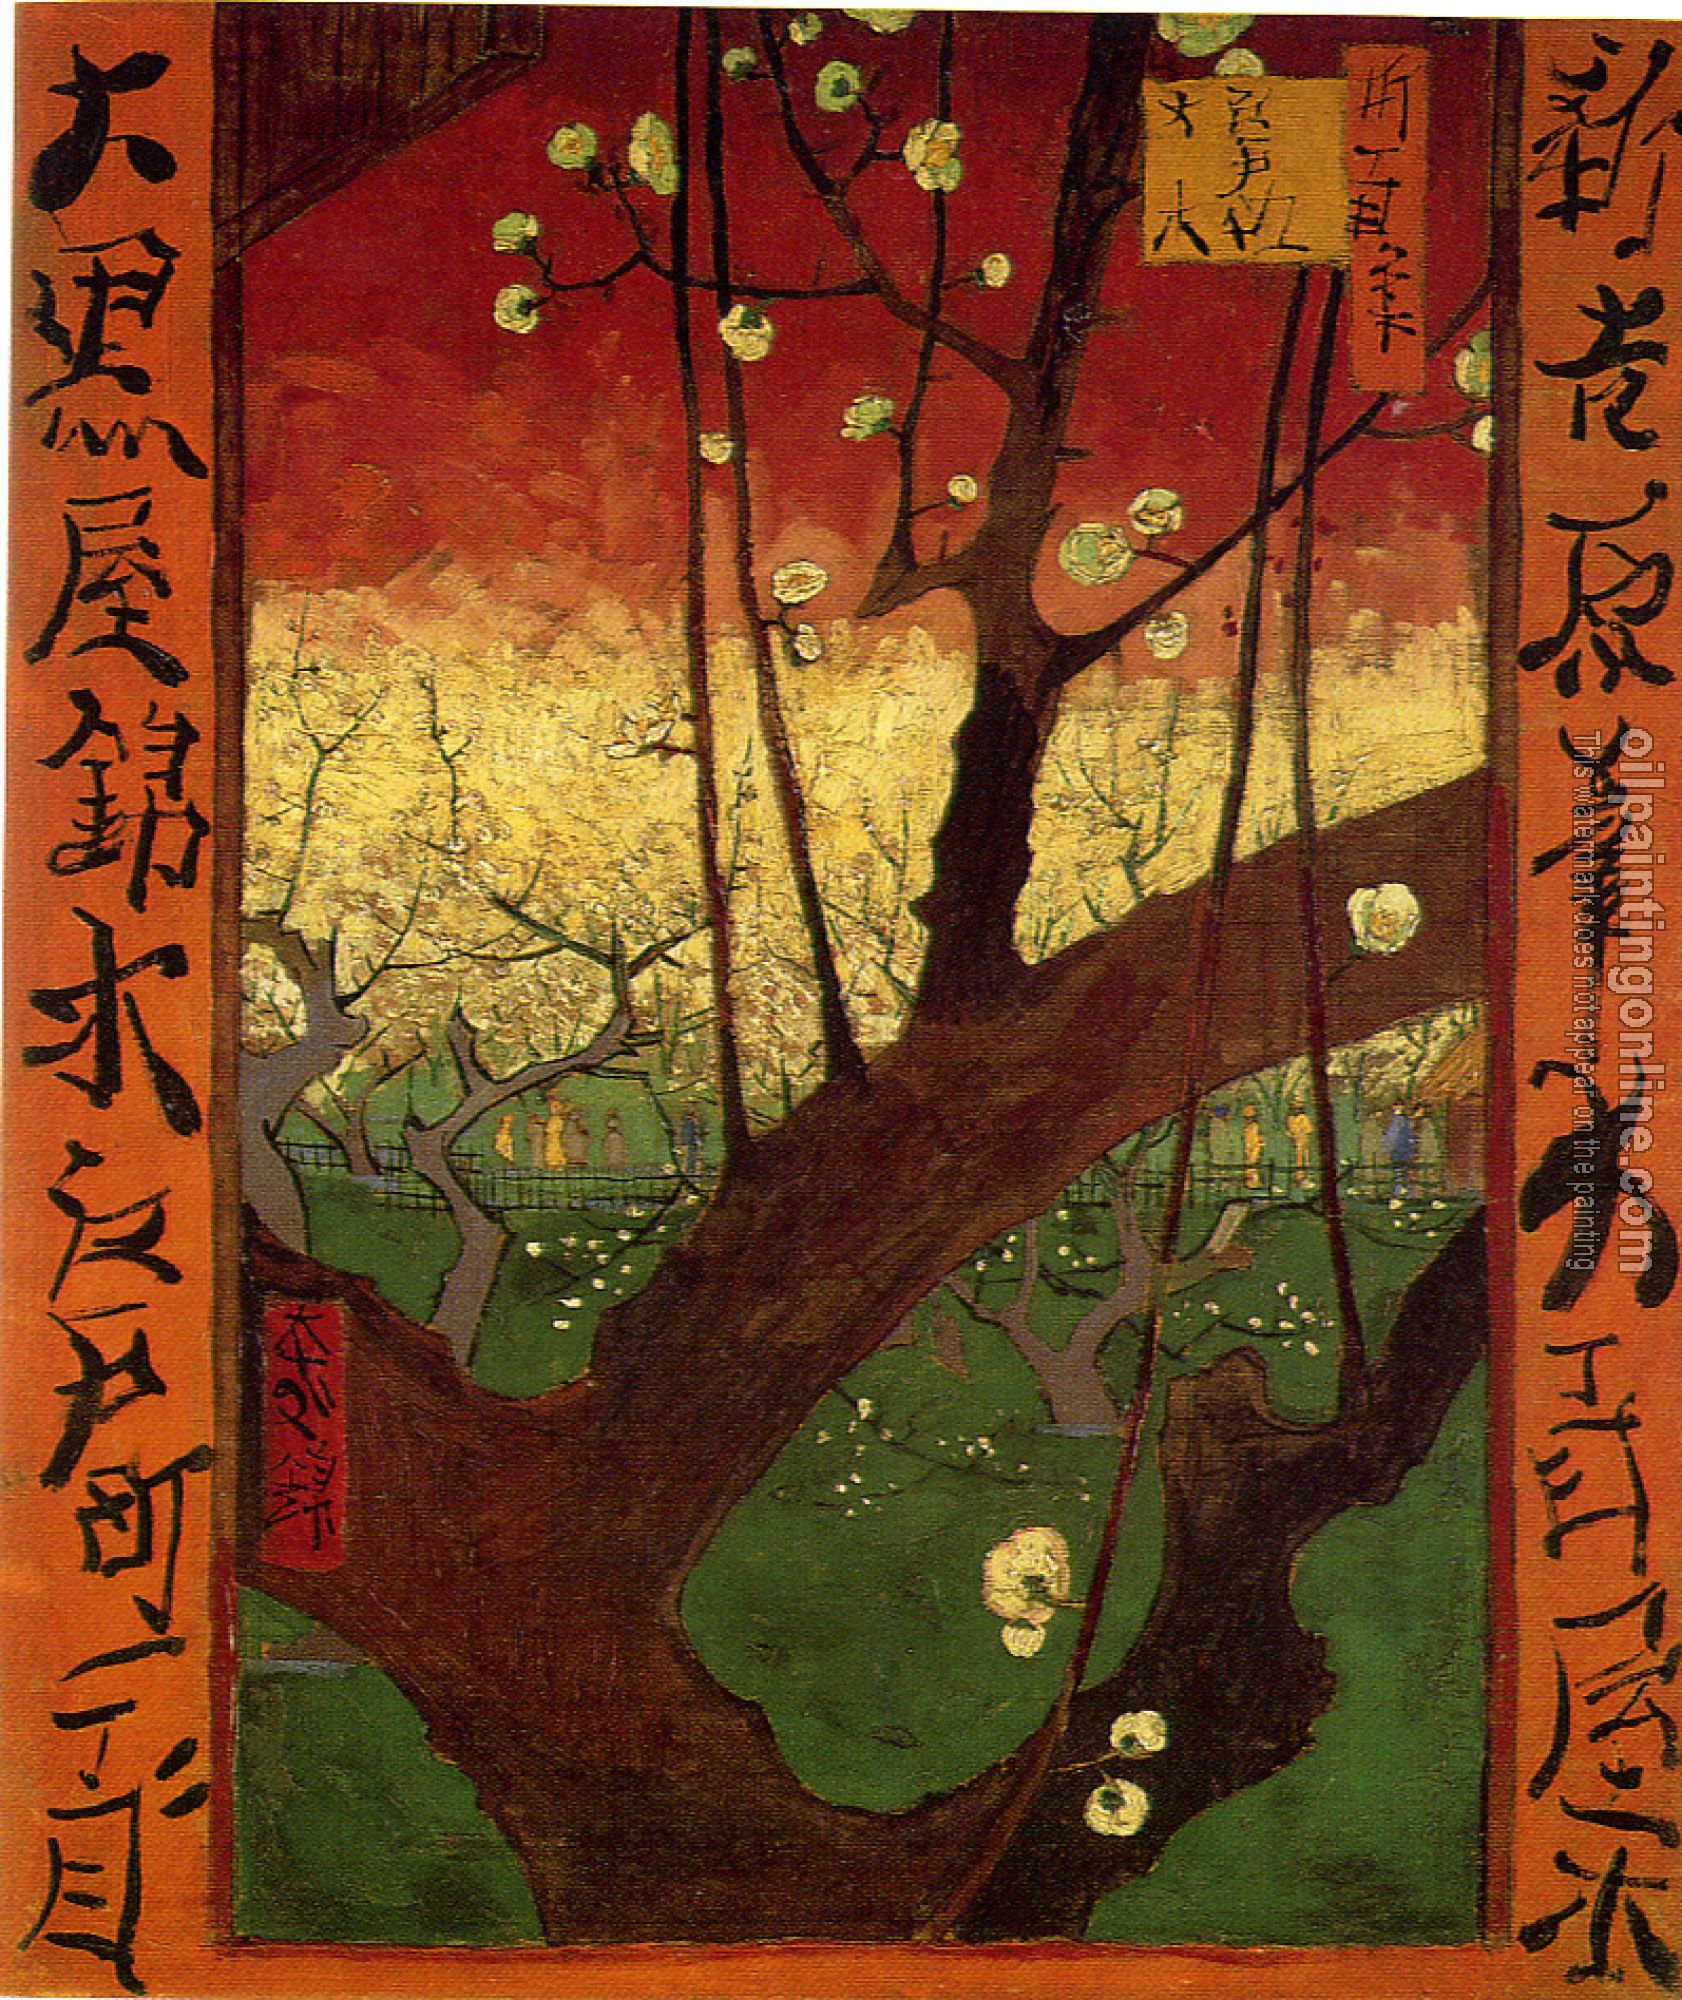 Gogh, Vincent van - Japonaiserie:Flowering Plum Tree(after Hiroshige)